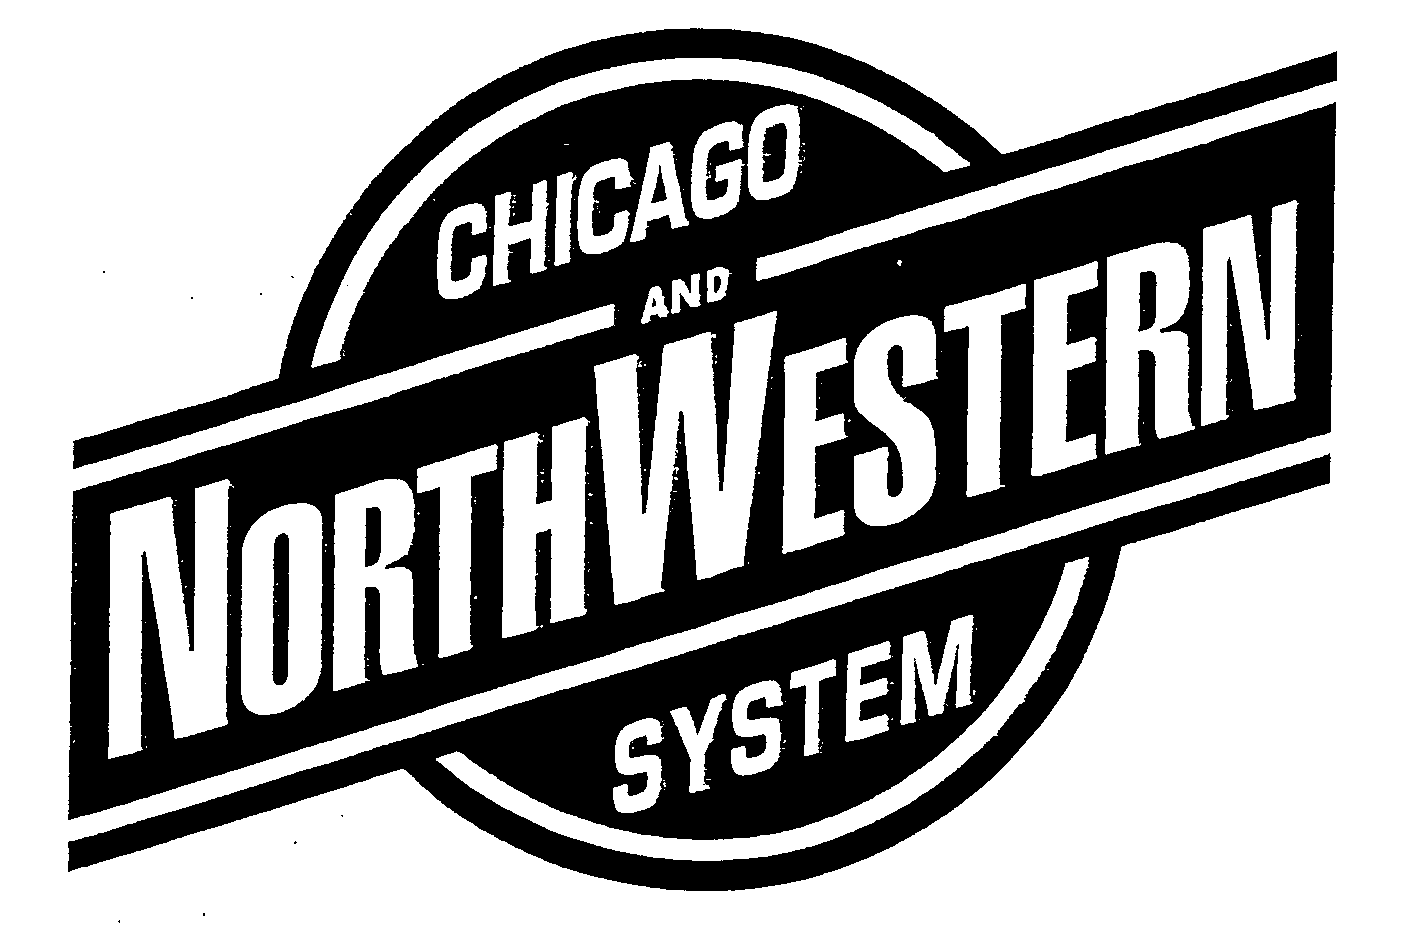  CHICAGO AND NORTHWESTERN SYSTEM